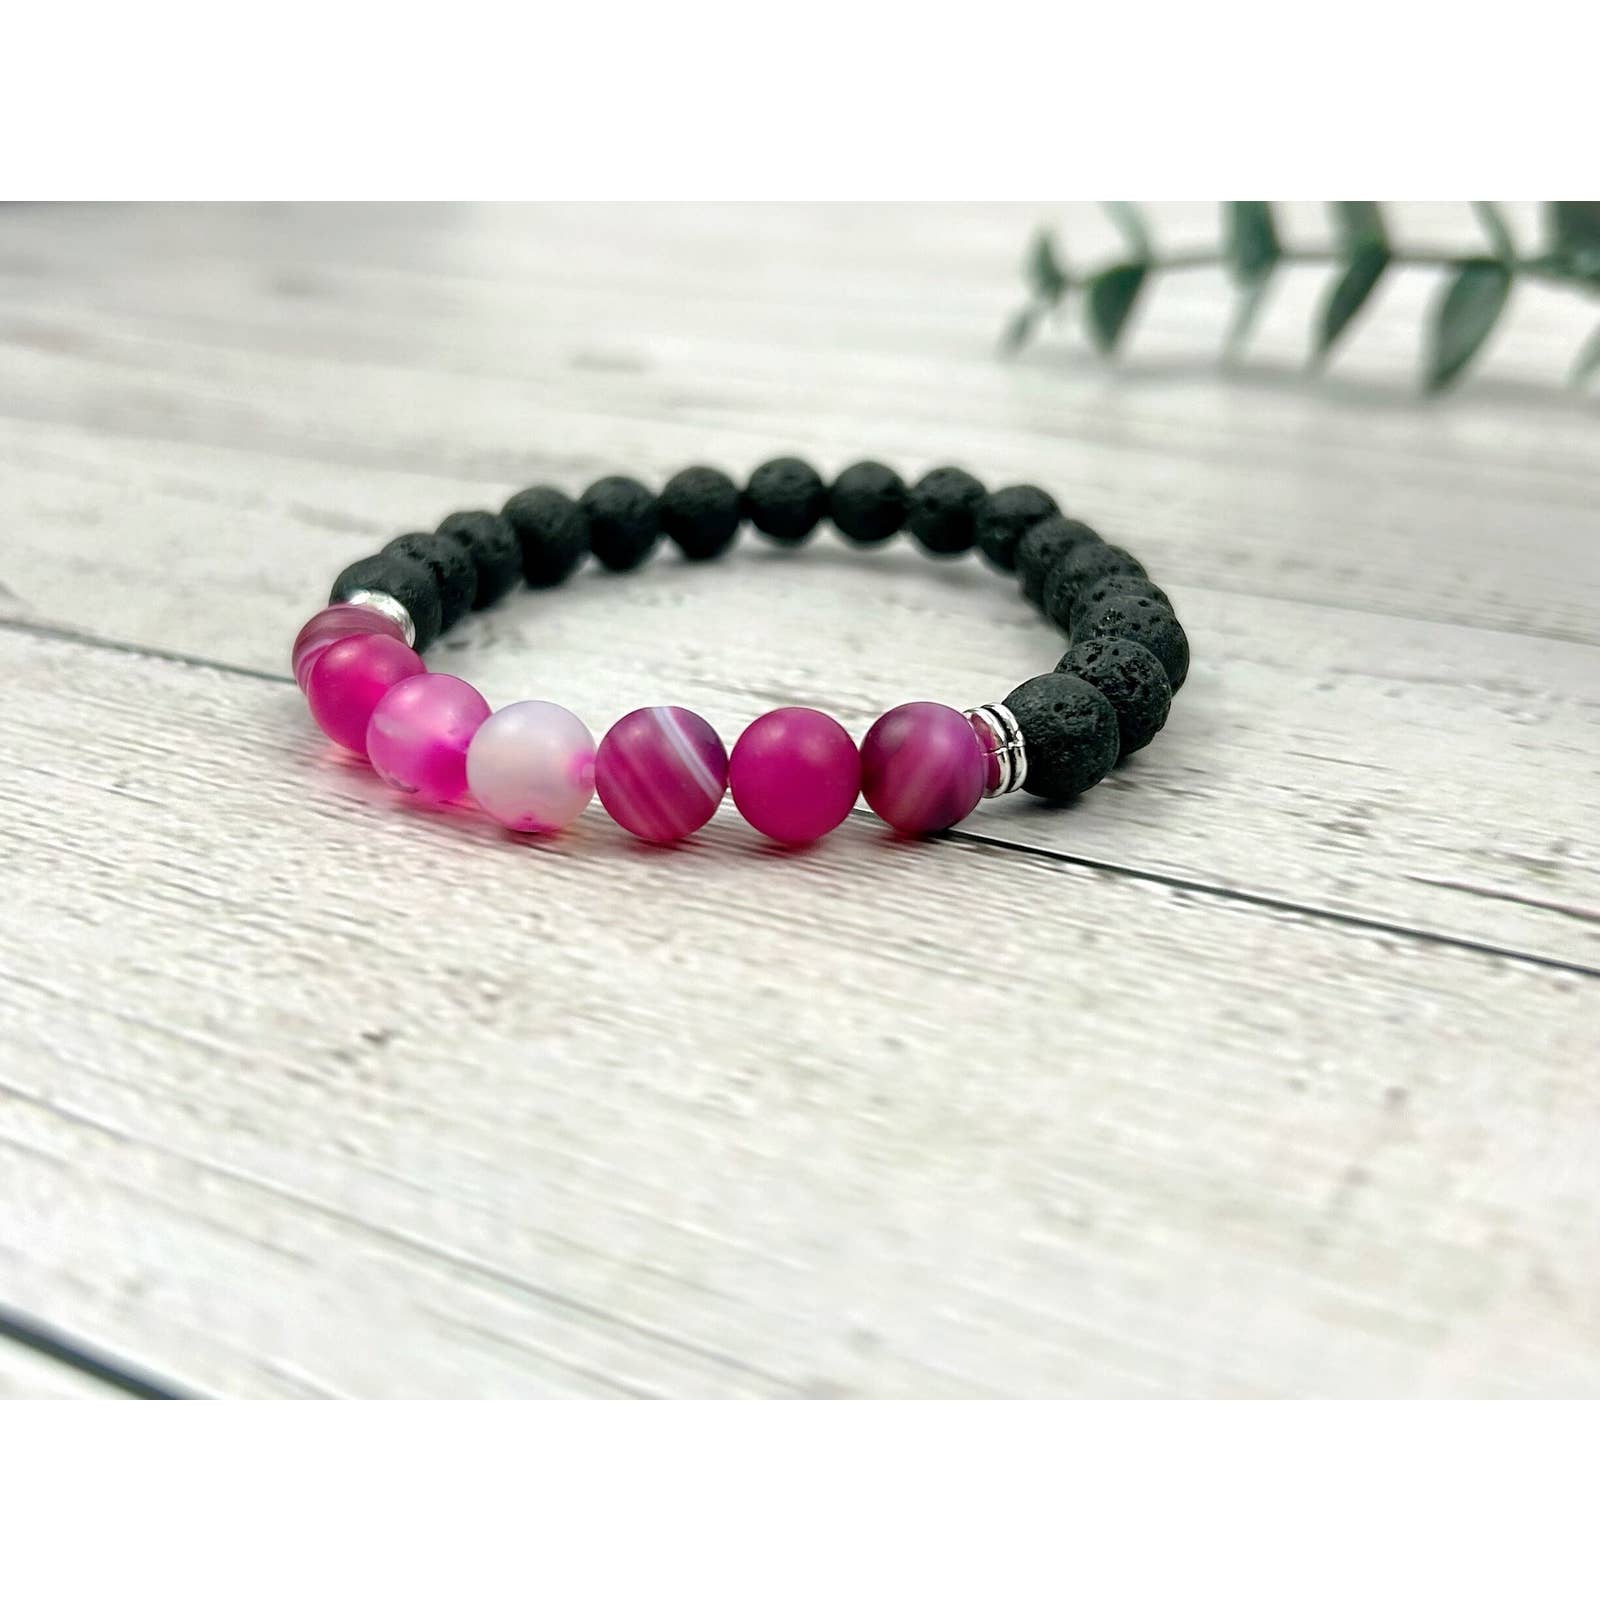 Essential Oil Diffuser Bracelet - Pink Agate Bracelet with Black Lava Beads